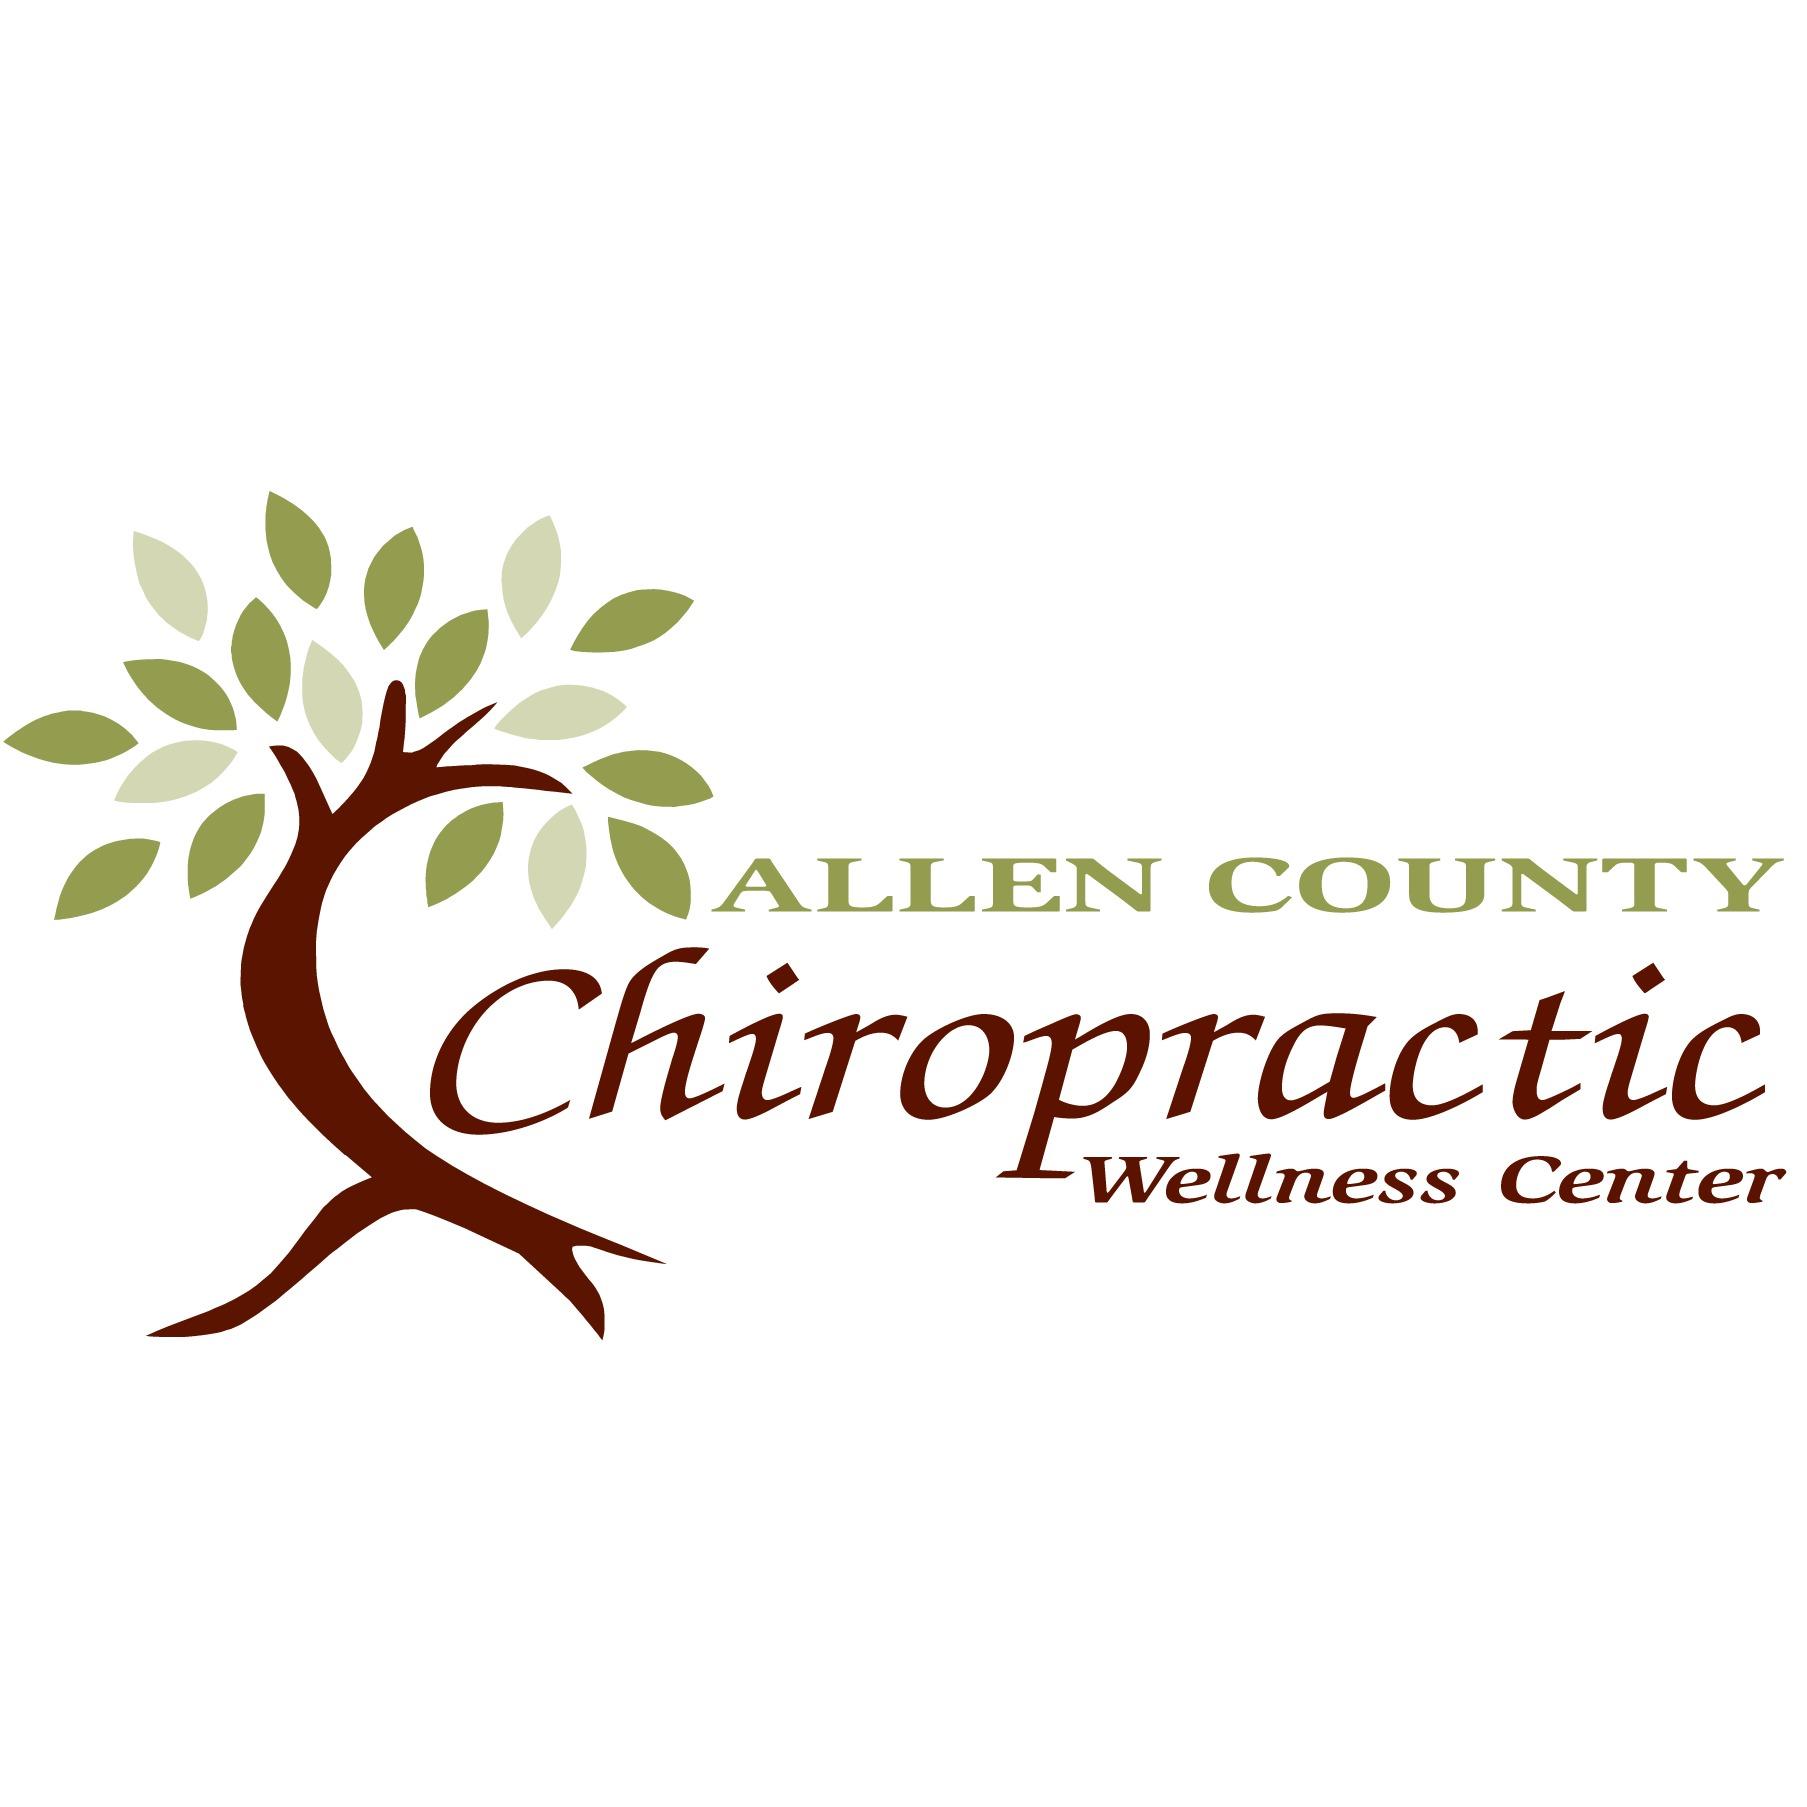 Allen County Chiropractic Wellness Center - Fort Wayne, IN 46804 - (260)432-7339 | ShowMeLocal.com